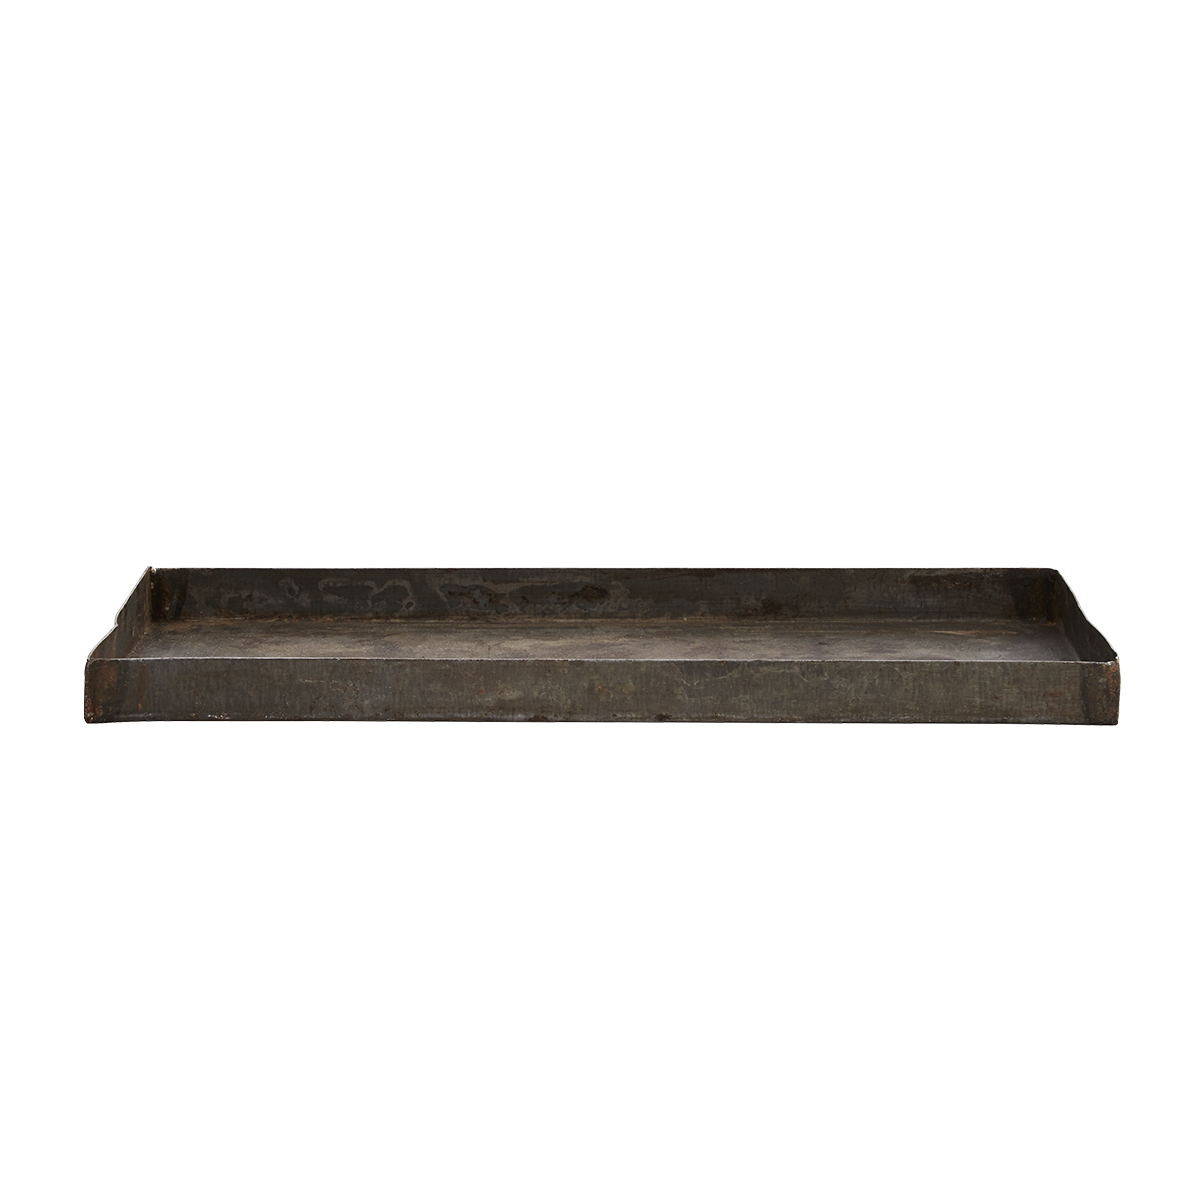 Reused rectangular iron tray